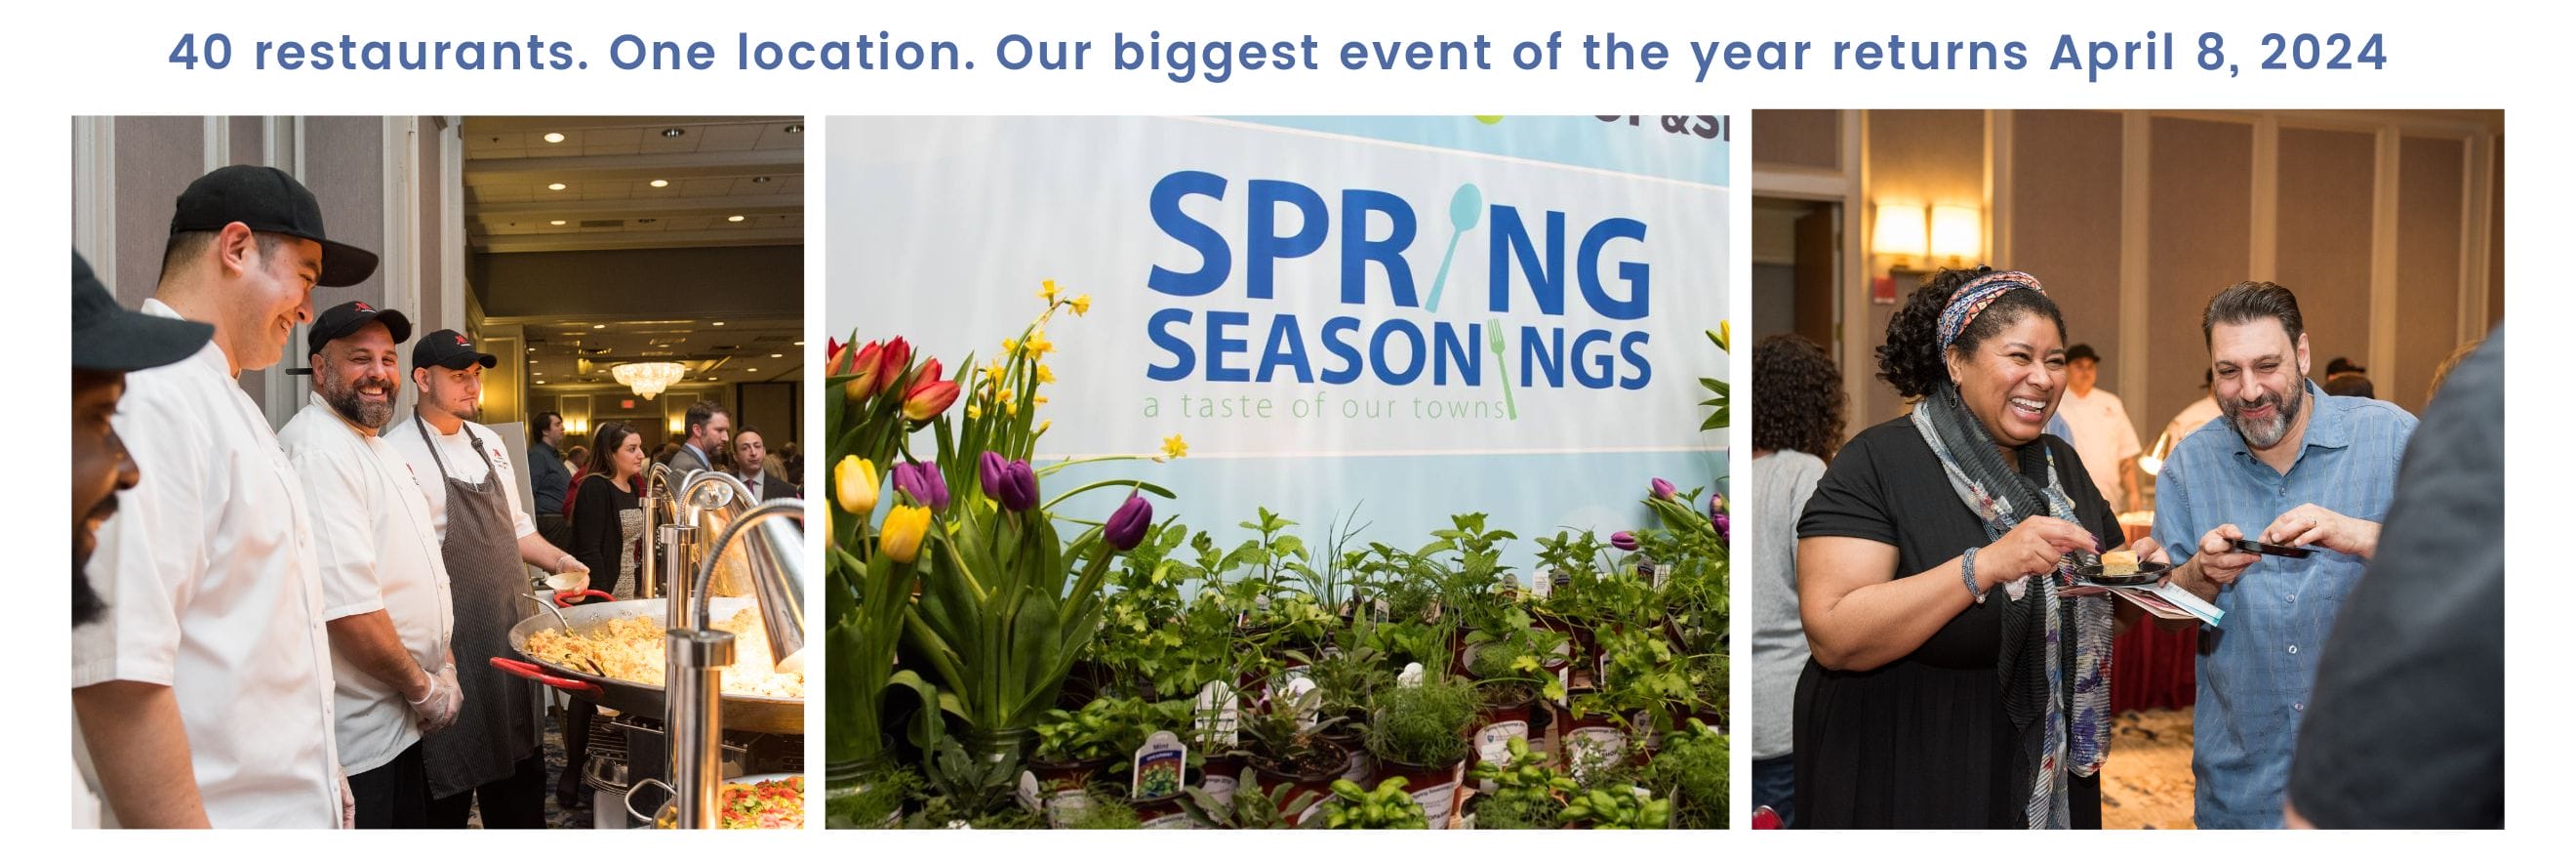 Spring Seasonings returns April 8